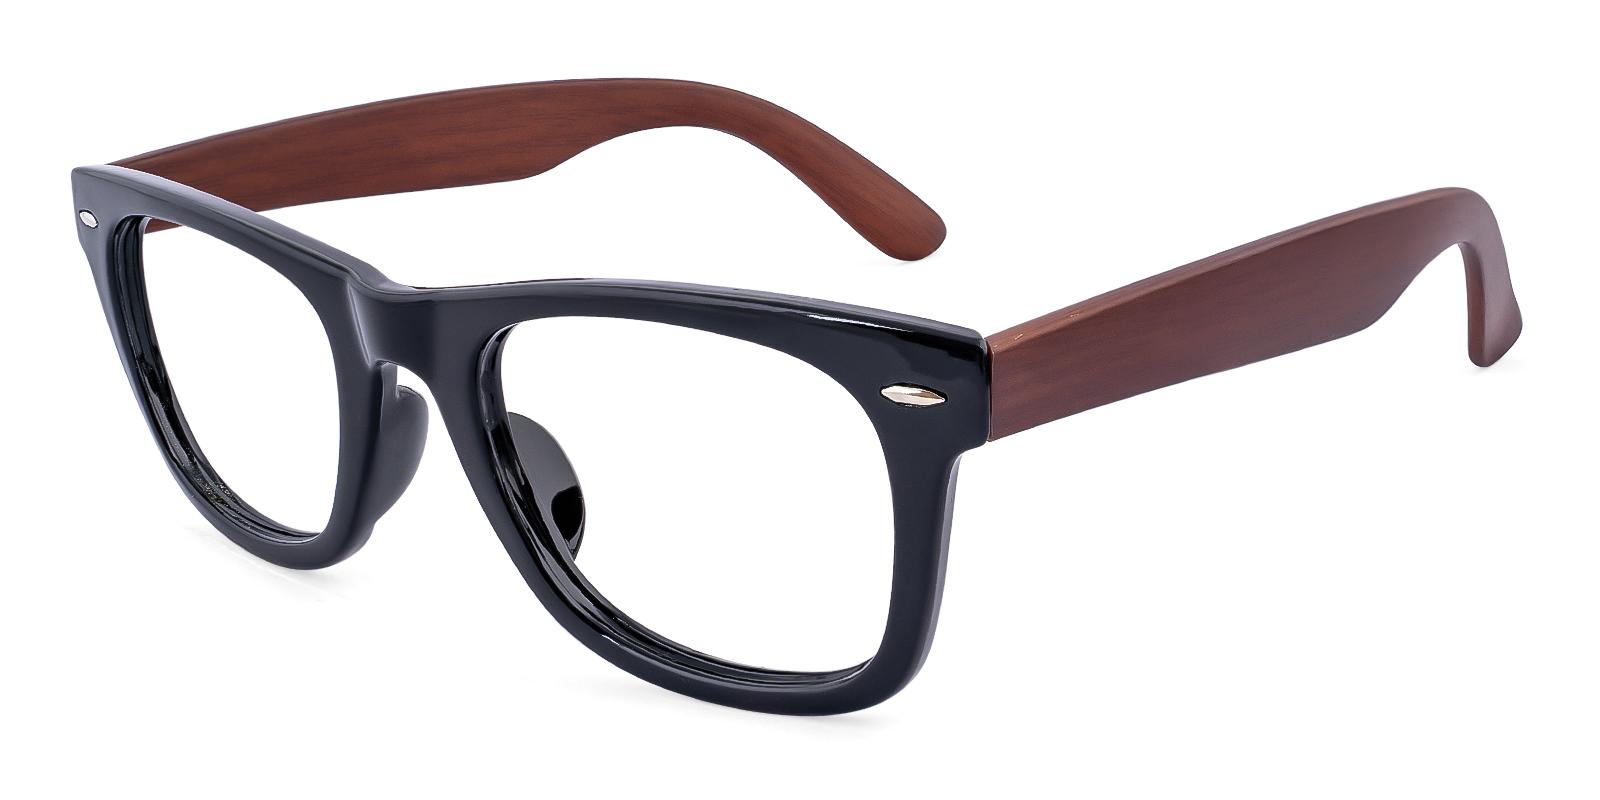 Vivaccord Black Plastic Eyeglasses , UniversalBridgeFit Frames from ABBE Glasses